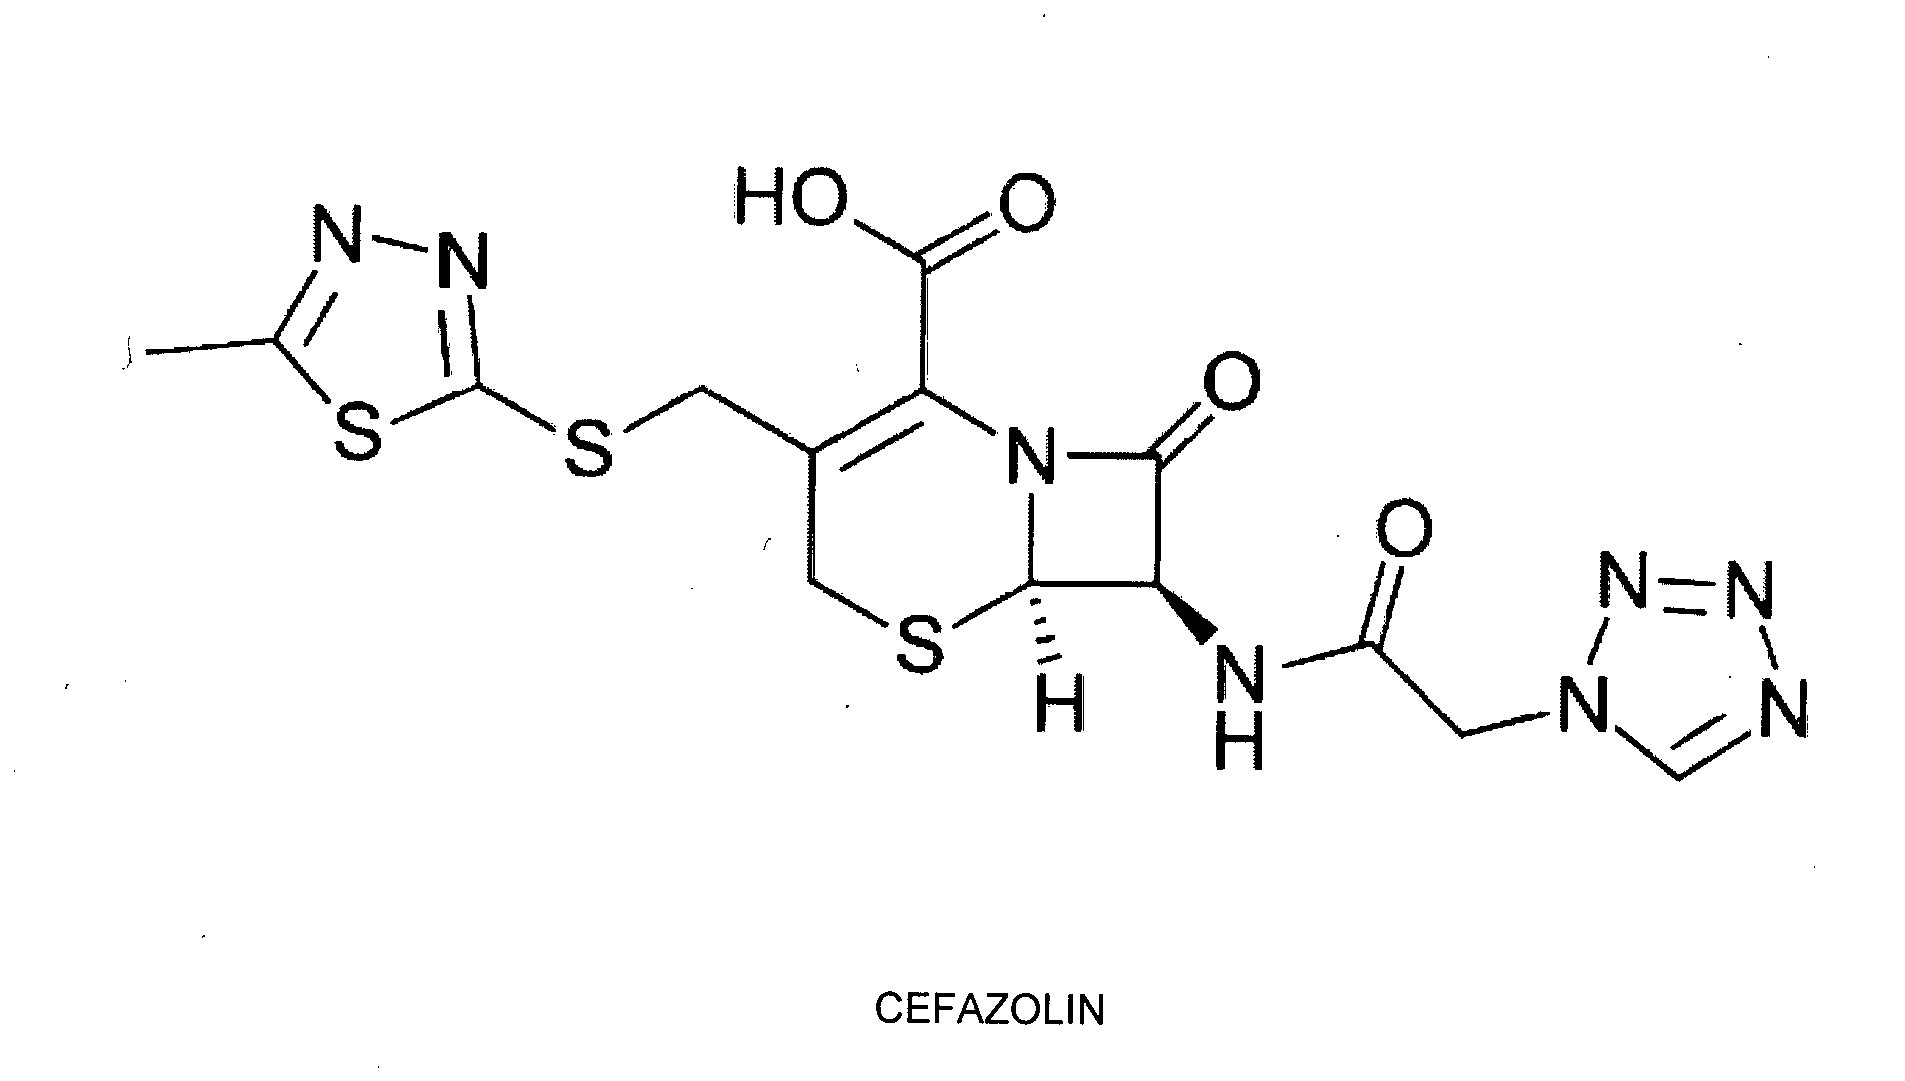 7-aminocephalosporanic acid derivative as inhibitor of il-15 and il-2 activity